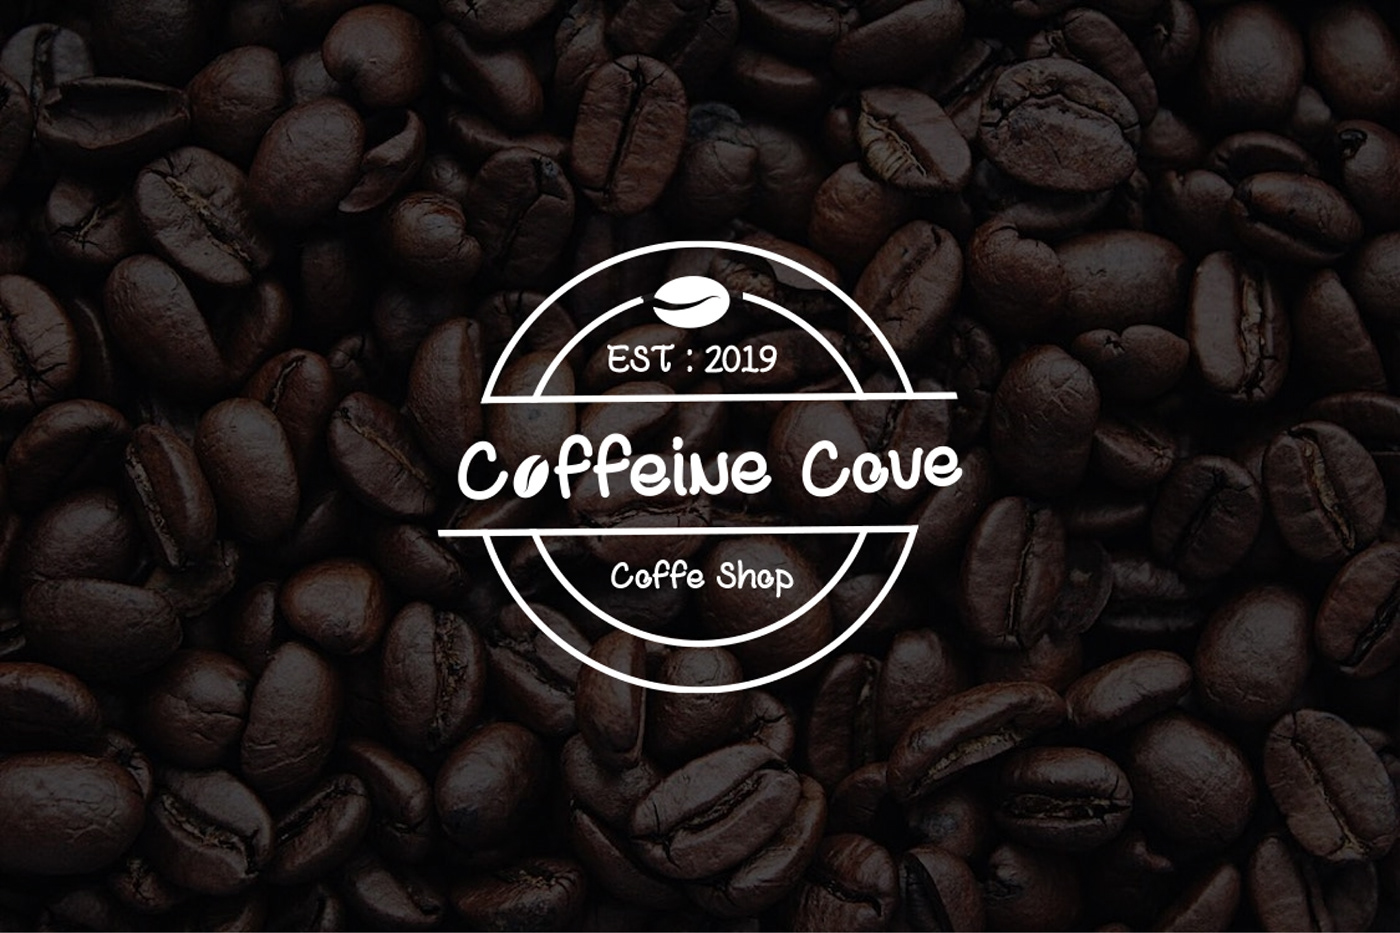 Logo Design, Brand Identity Creation and Branding for Caffeine Cave Coffee Shop